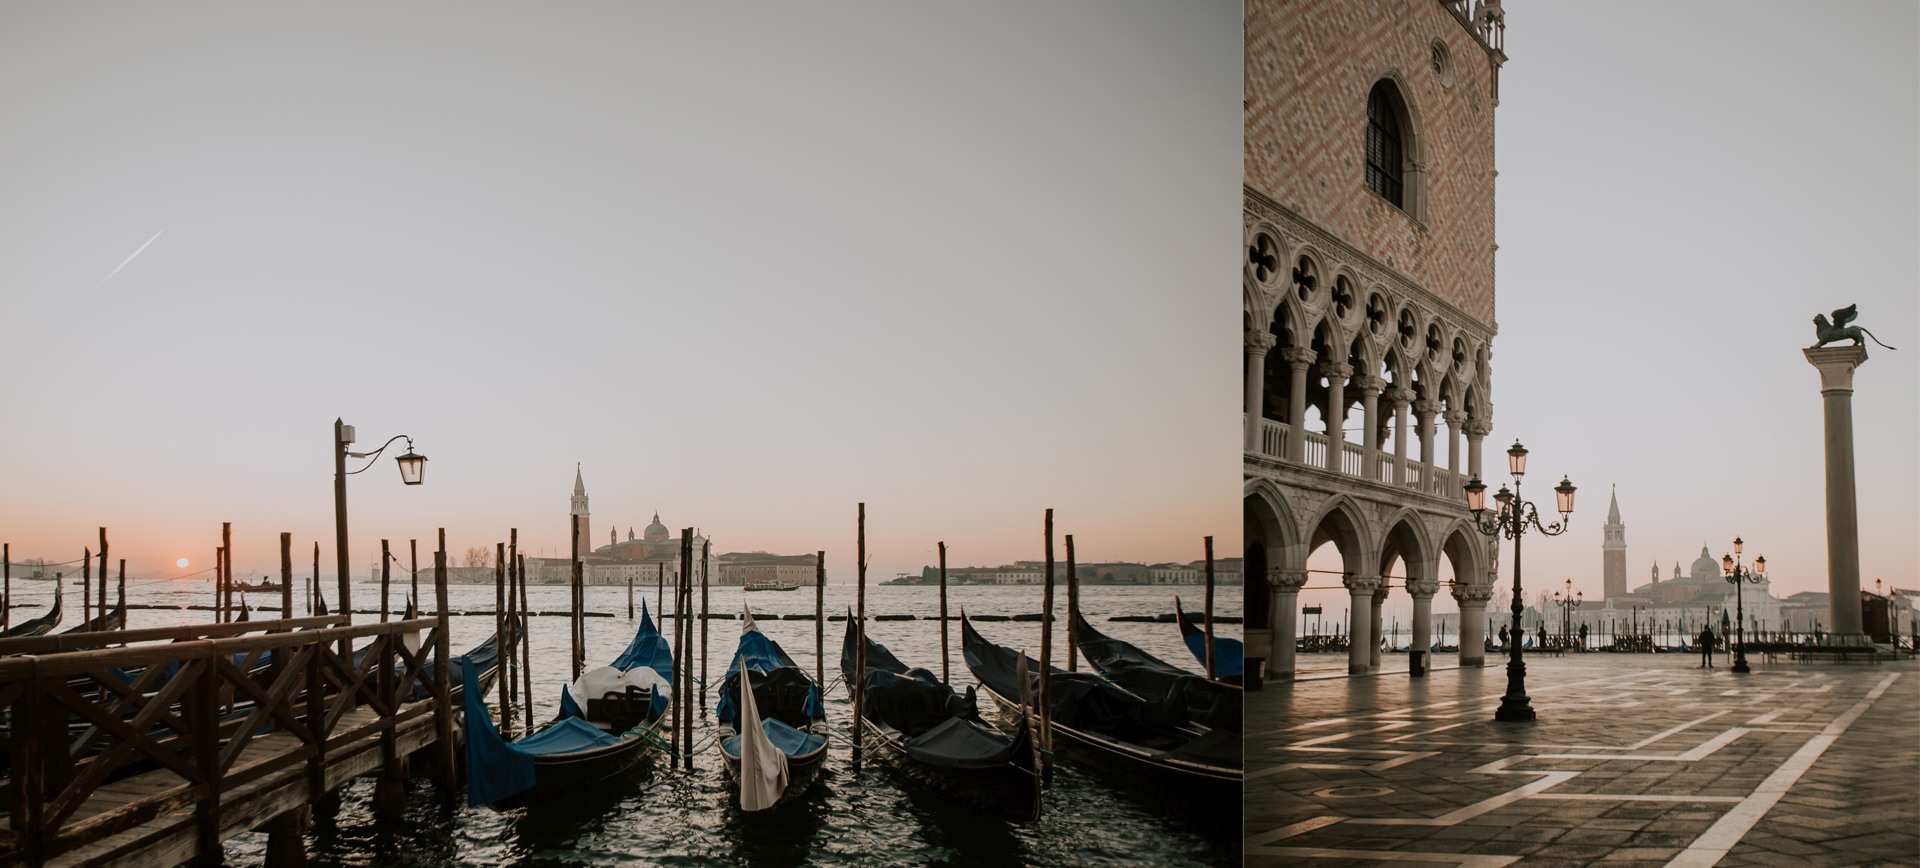 Elopement in Venice - wedding with gondola ride